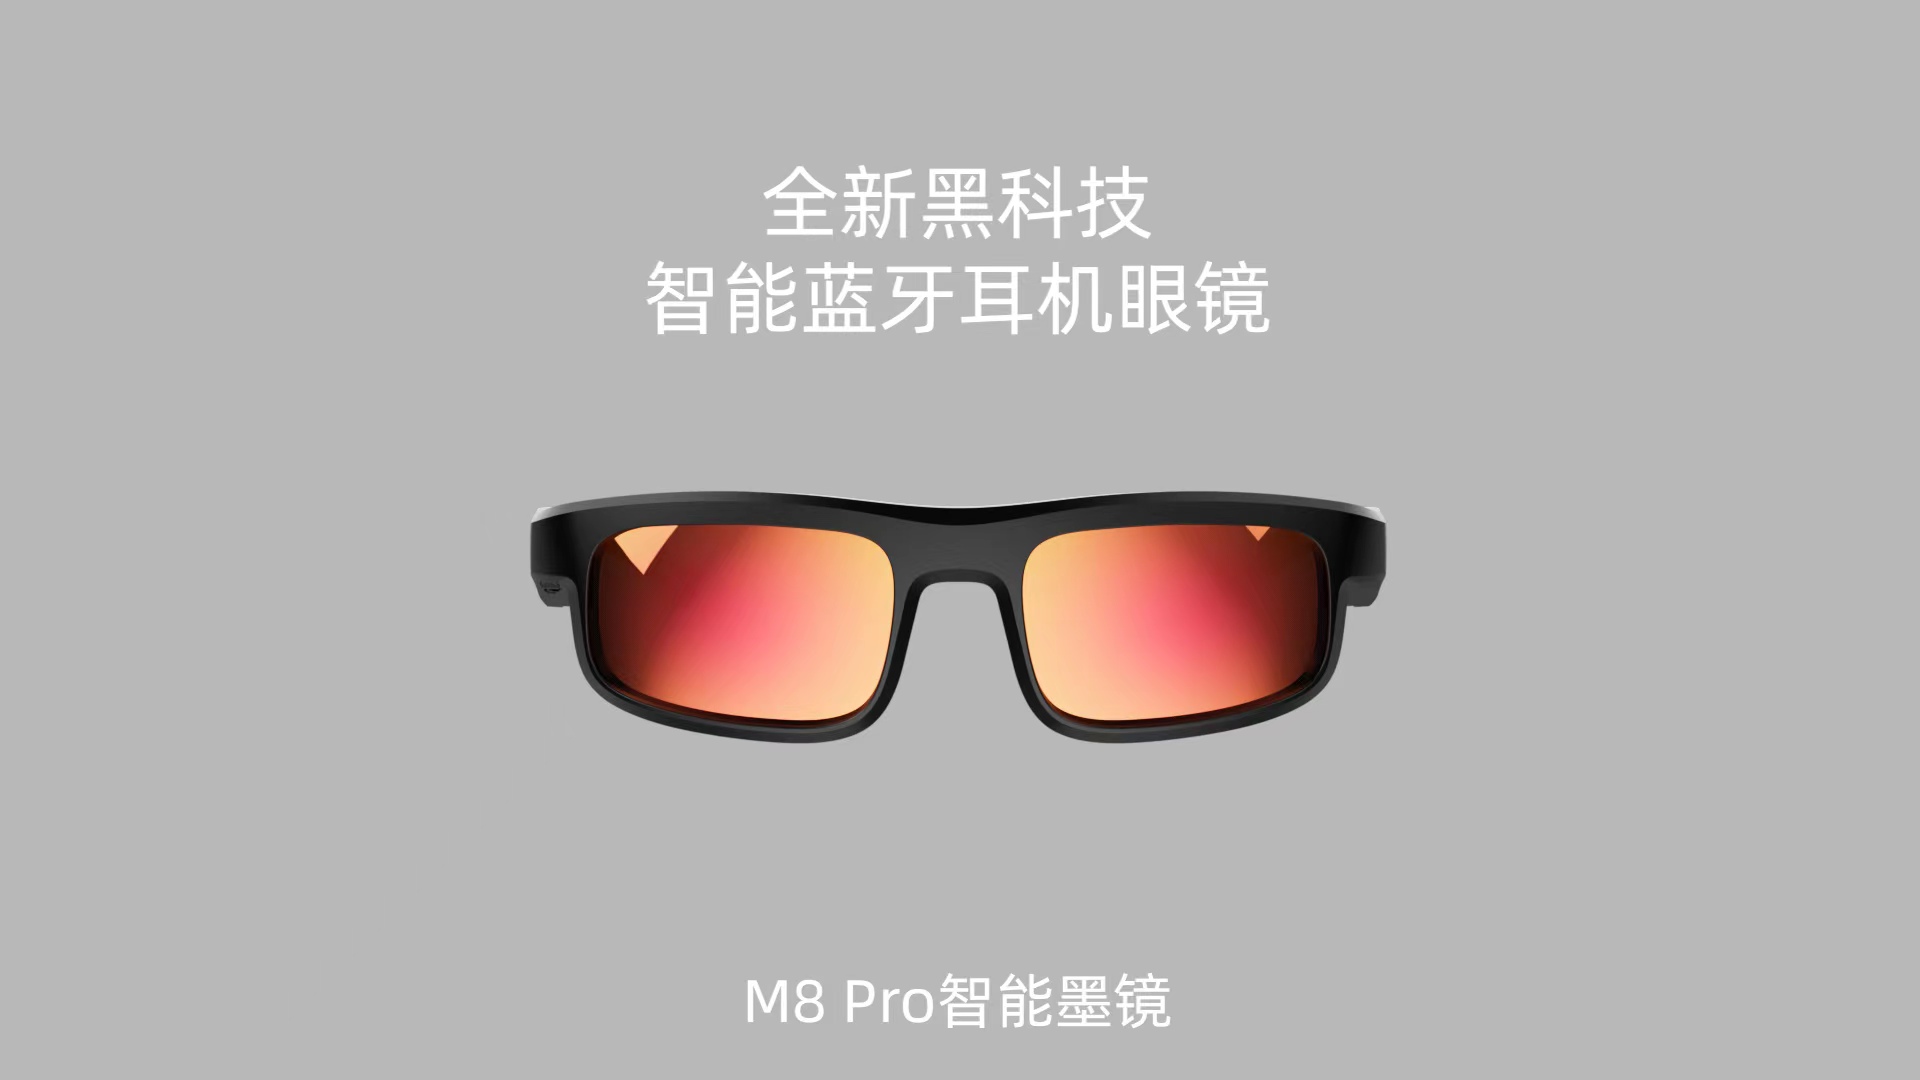 M8 Pro智能蓝牙眼镜 蓝牙耳机眼镜 通话 听歌 墨镜 防紫外线详情图4